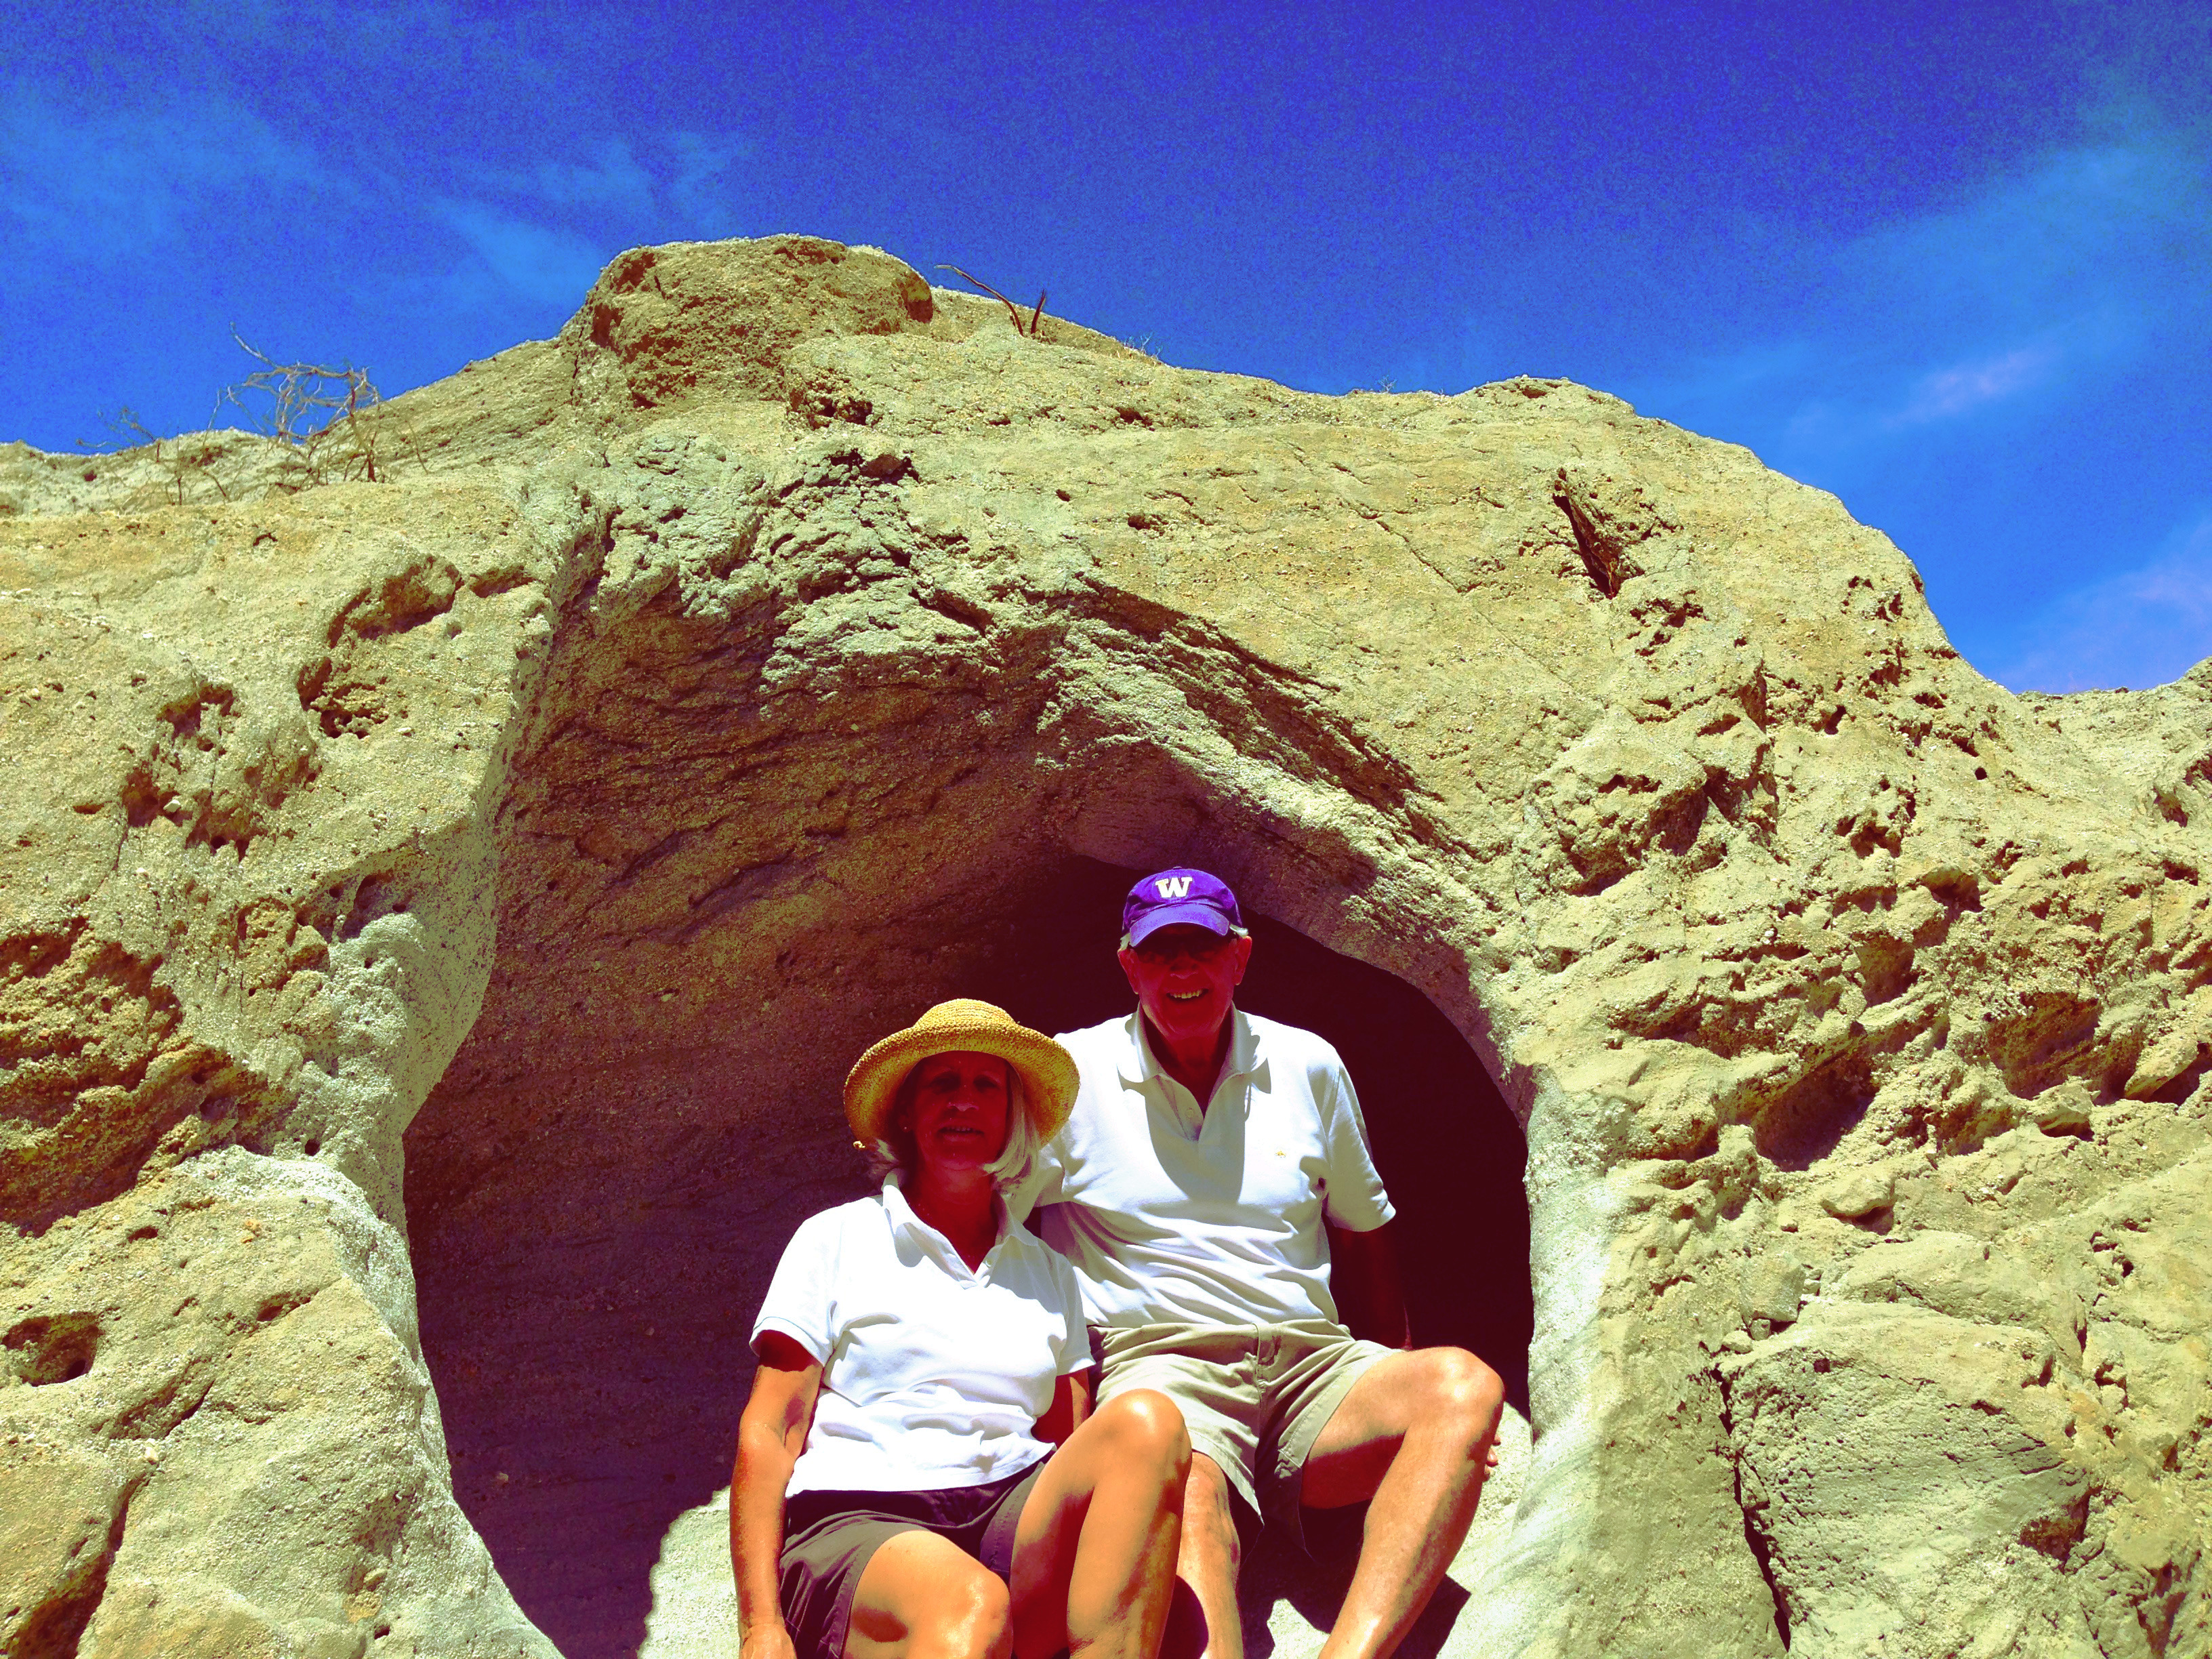 Debra and Arlen Prentice hiking near the San Andreas Fault